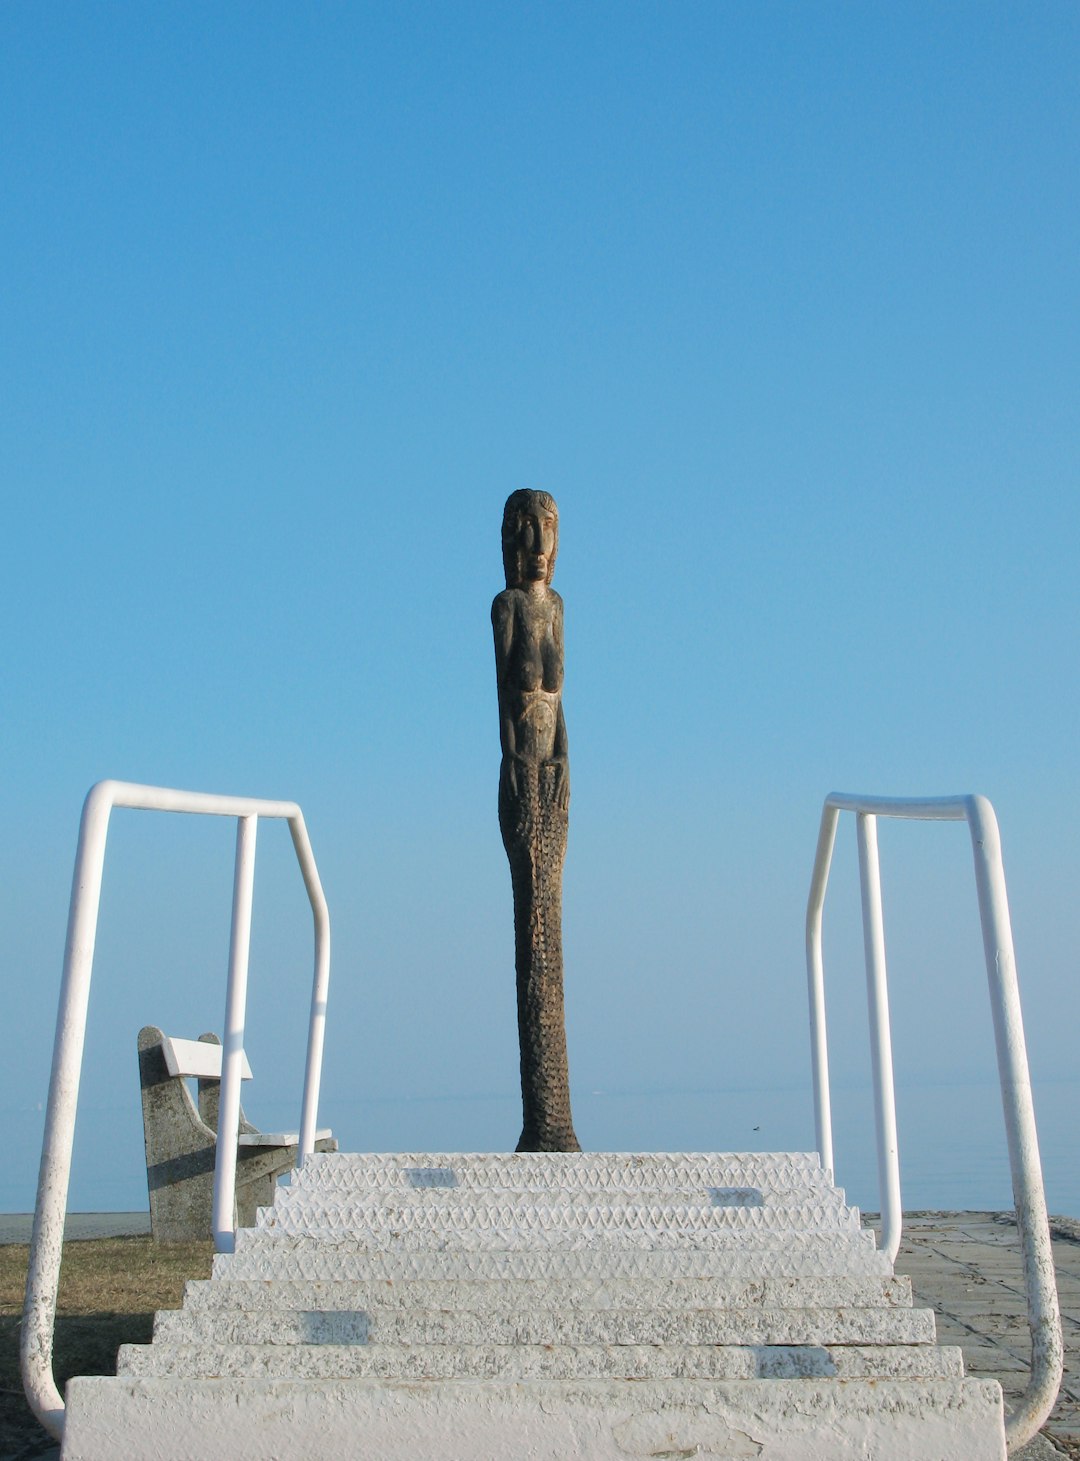 white wooden chair near statue under blue sky during daytime